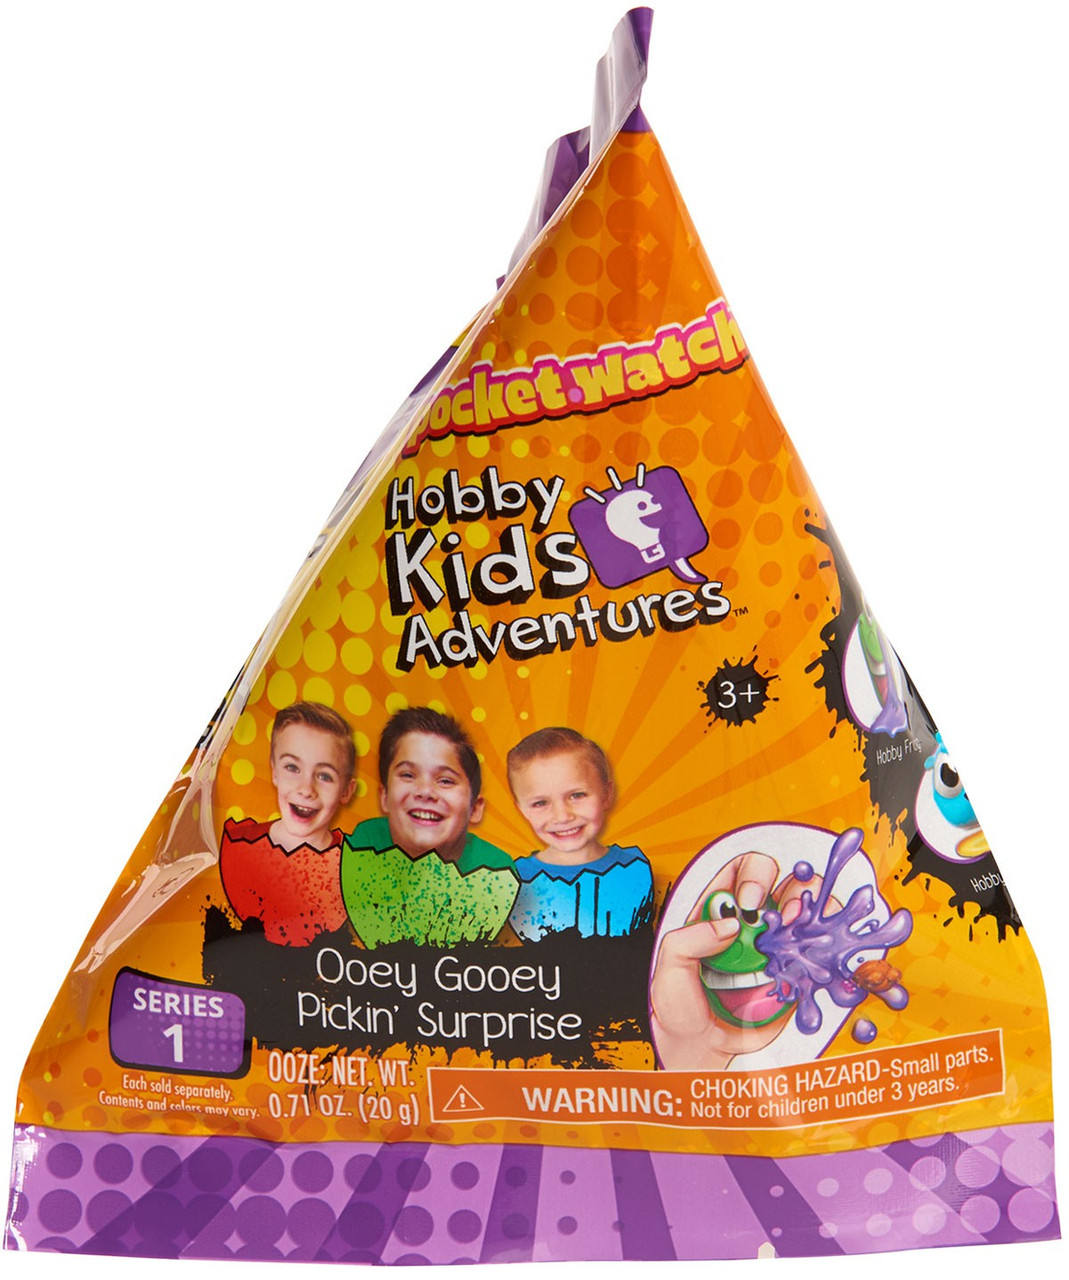 Hobbykids Adventures Ooey Gooey Pickin Surprise Mystery Pack Pocket Watch Toywiz - the official hobbykidstv fan club roblox